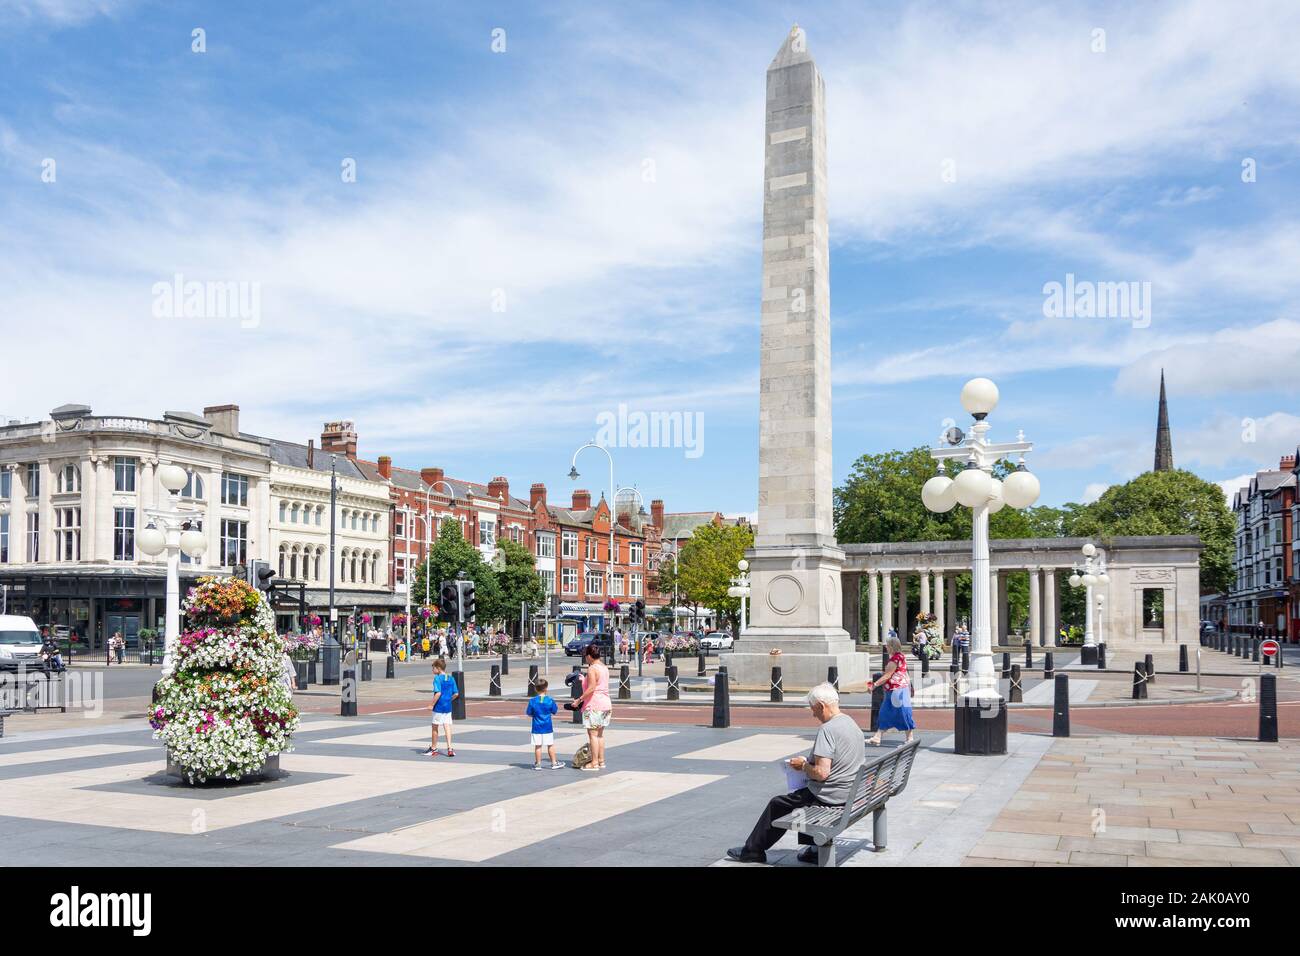 El monumento, plaza de Londres. Lord Street, Southport, Merseyside, Inglaterra, Reino Unido Foto de stock